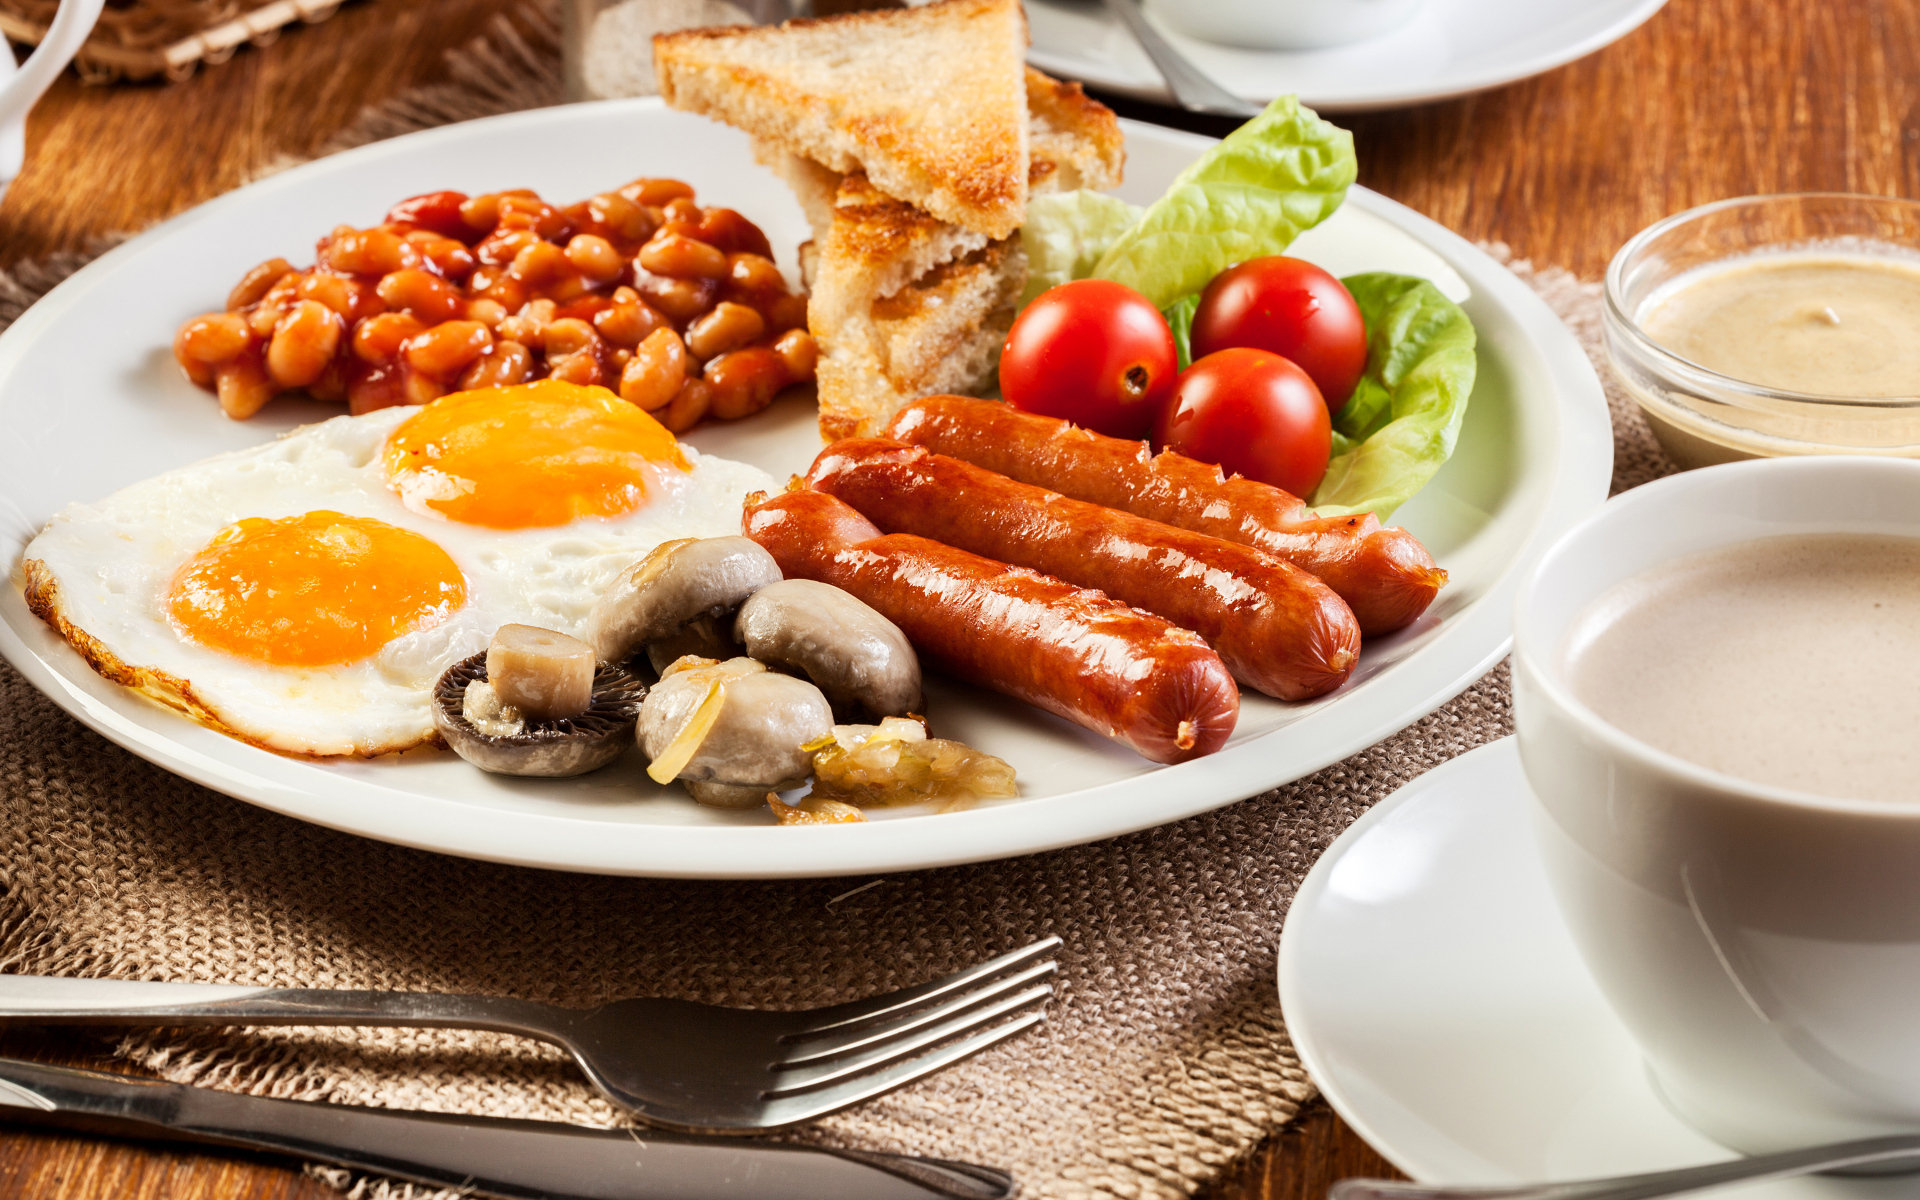 Яичница, сосиски и овощи на тарелке на завтрак